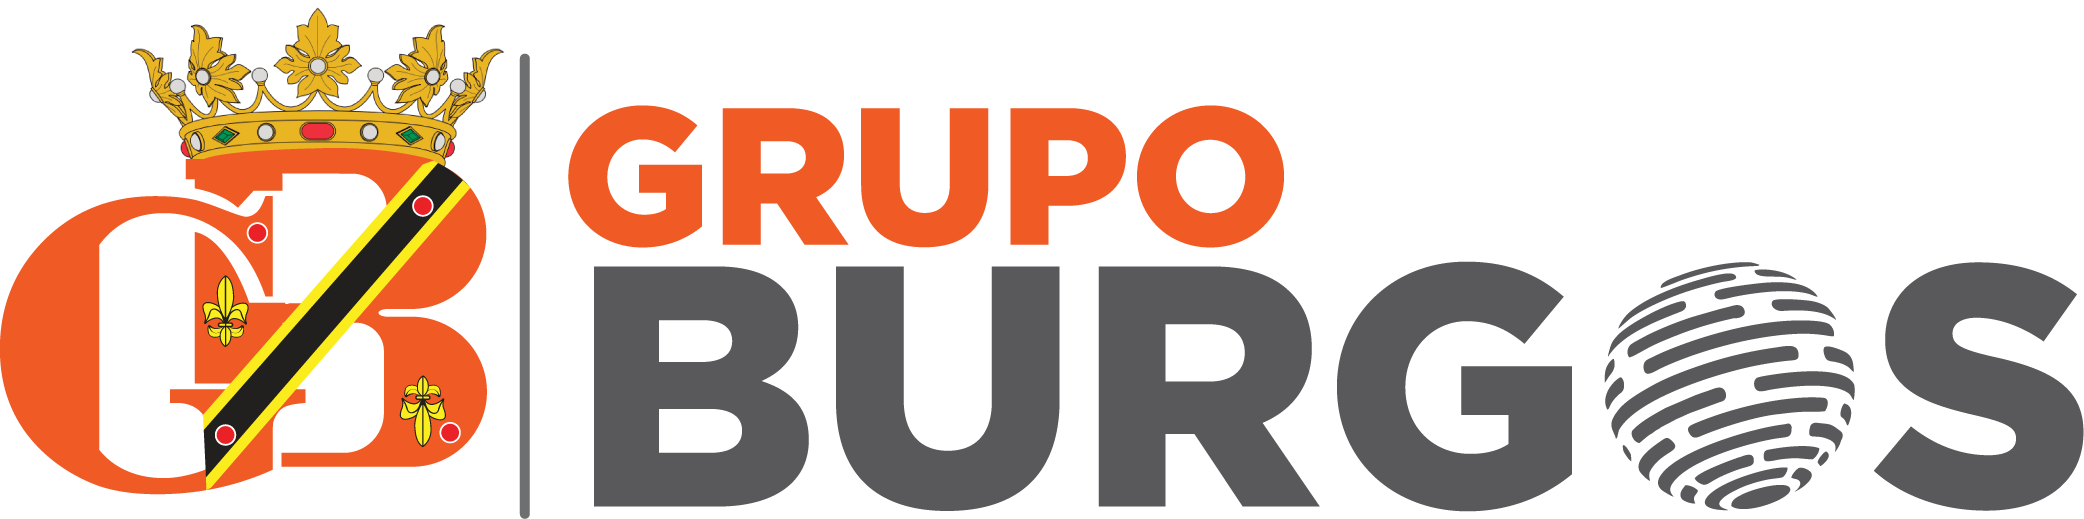 Grupo Burgos